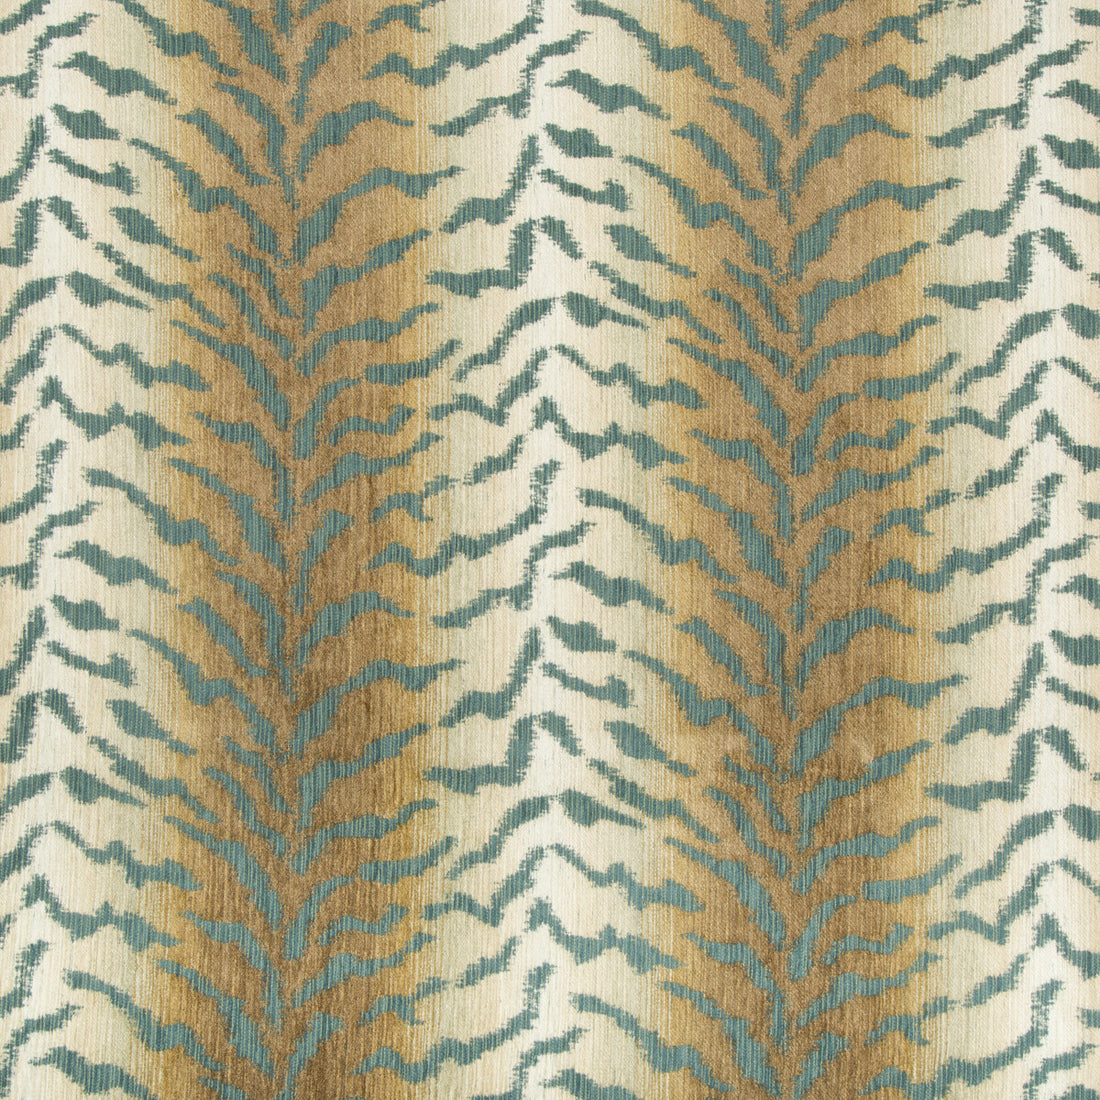 Kravet Design fabric in 34715-635 color - pattern 34715.635.0 - by Kravet Design in the Gis collection